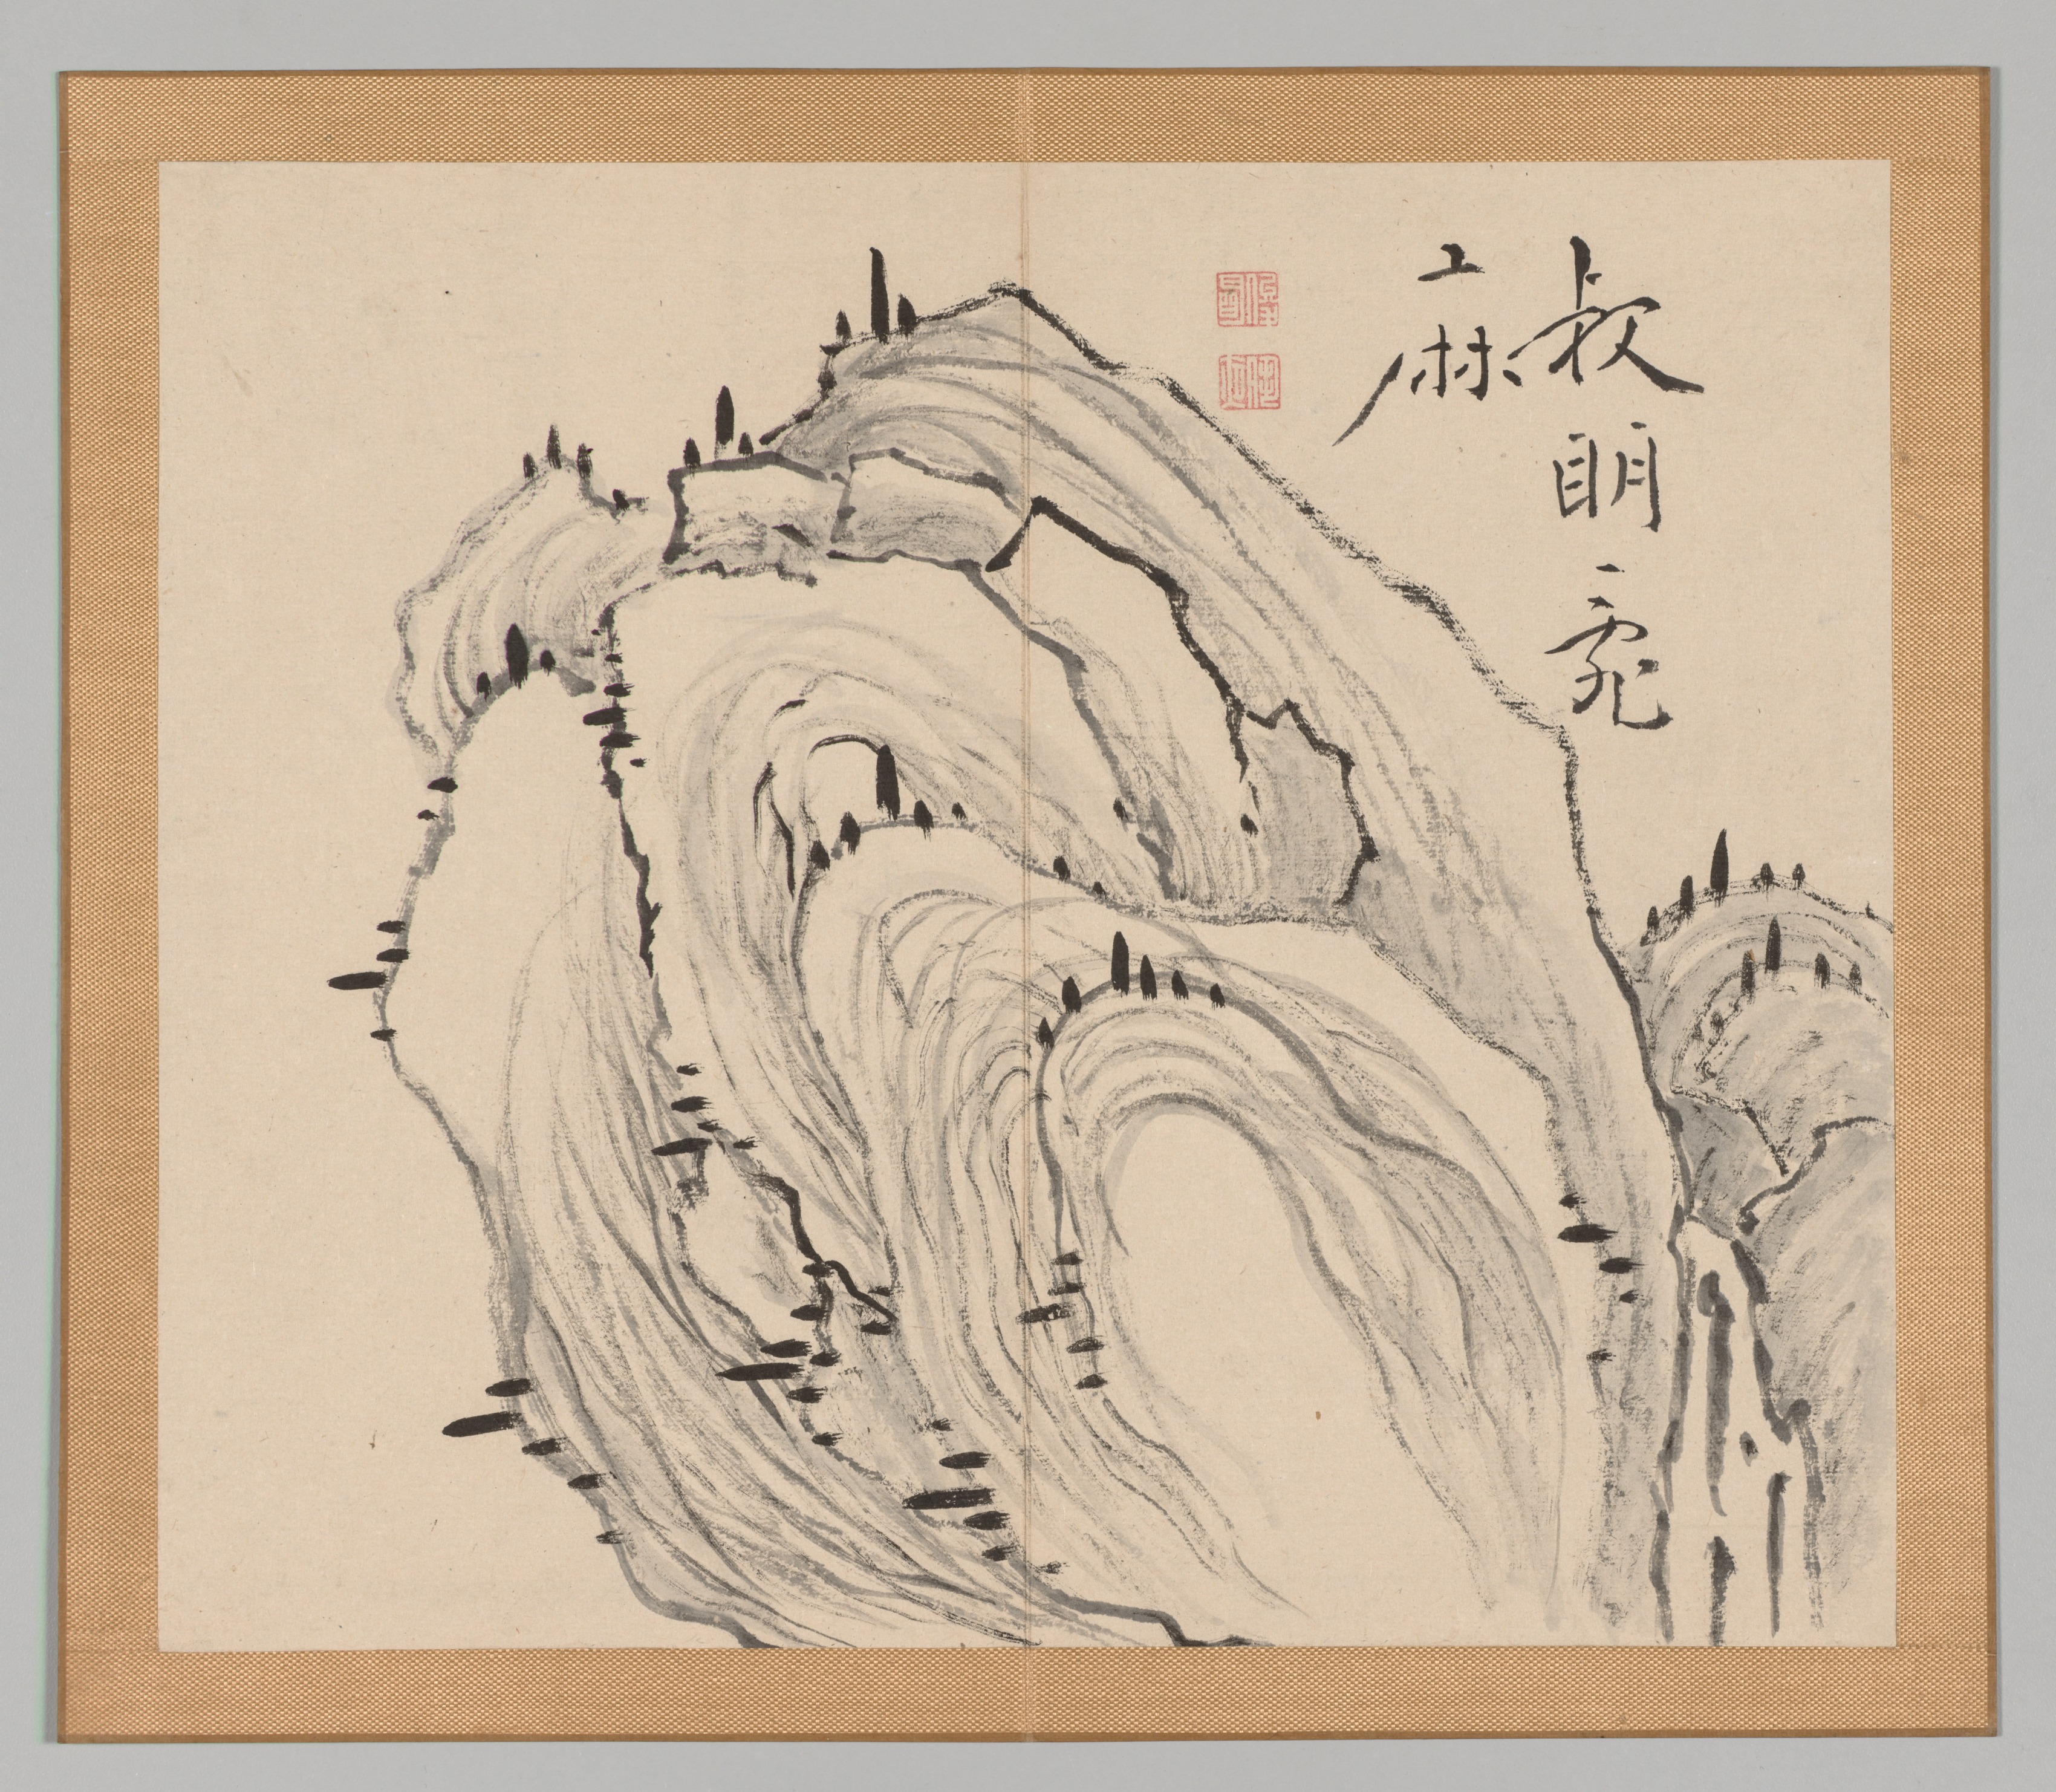 Reverberations of Taiga, Volume 1 (leaf 11)